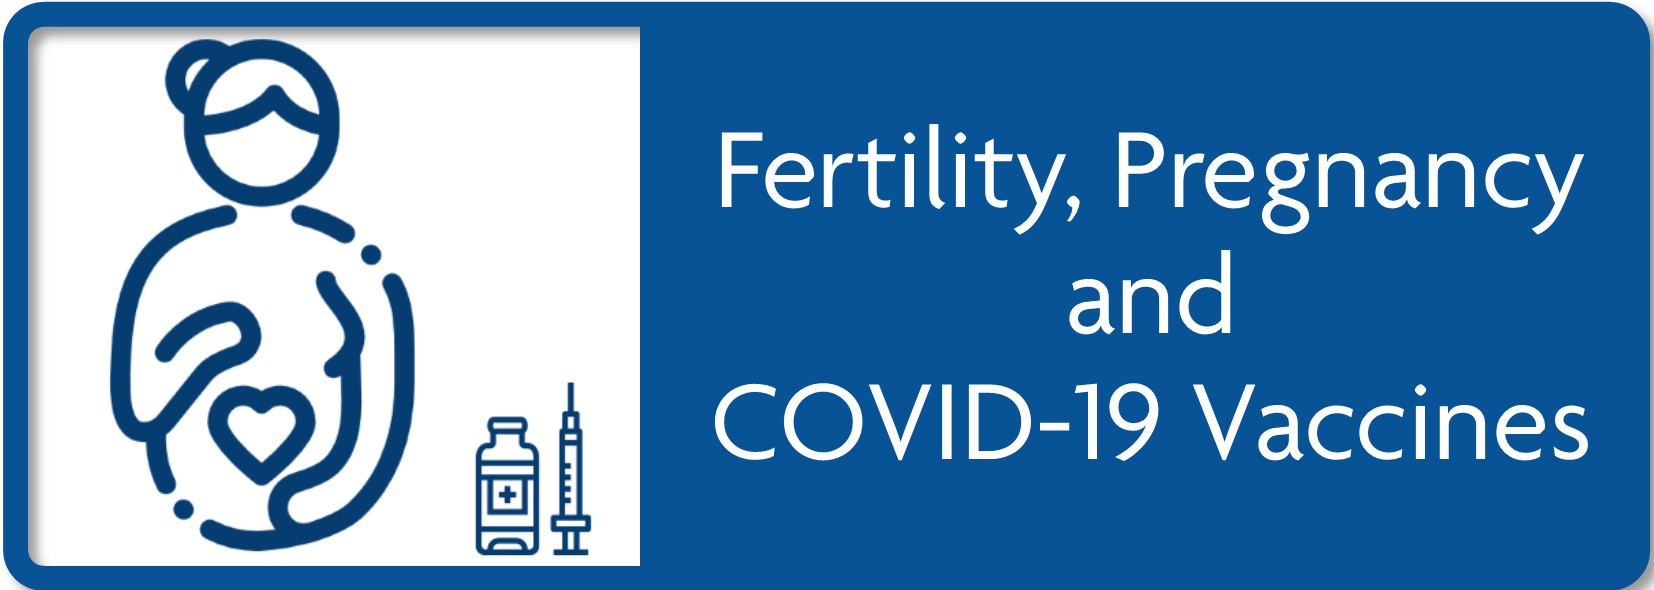 Fertility, Pregnancy and COVID-19 Vaccines